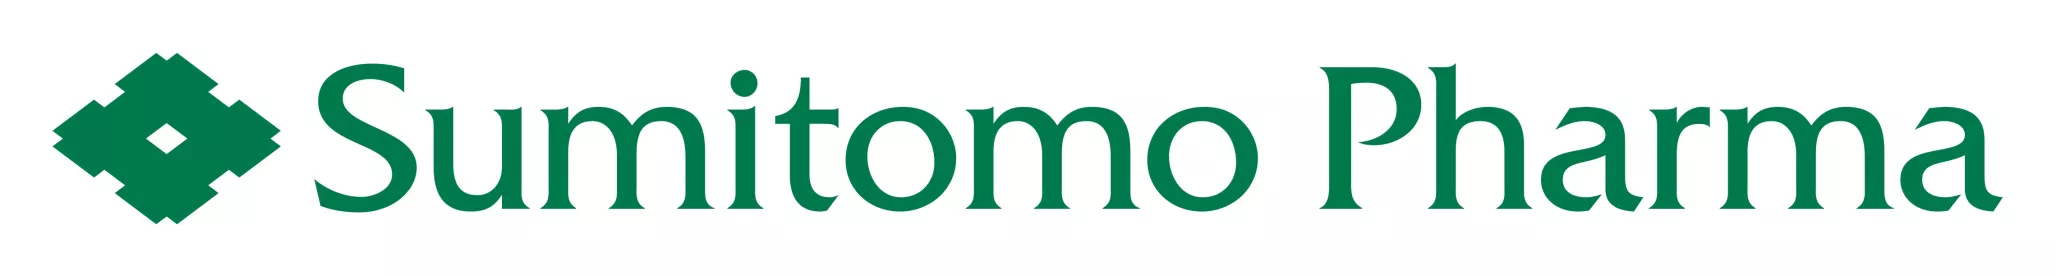 Sumitomo Pharma Logo